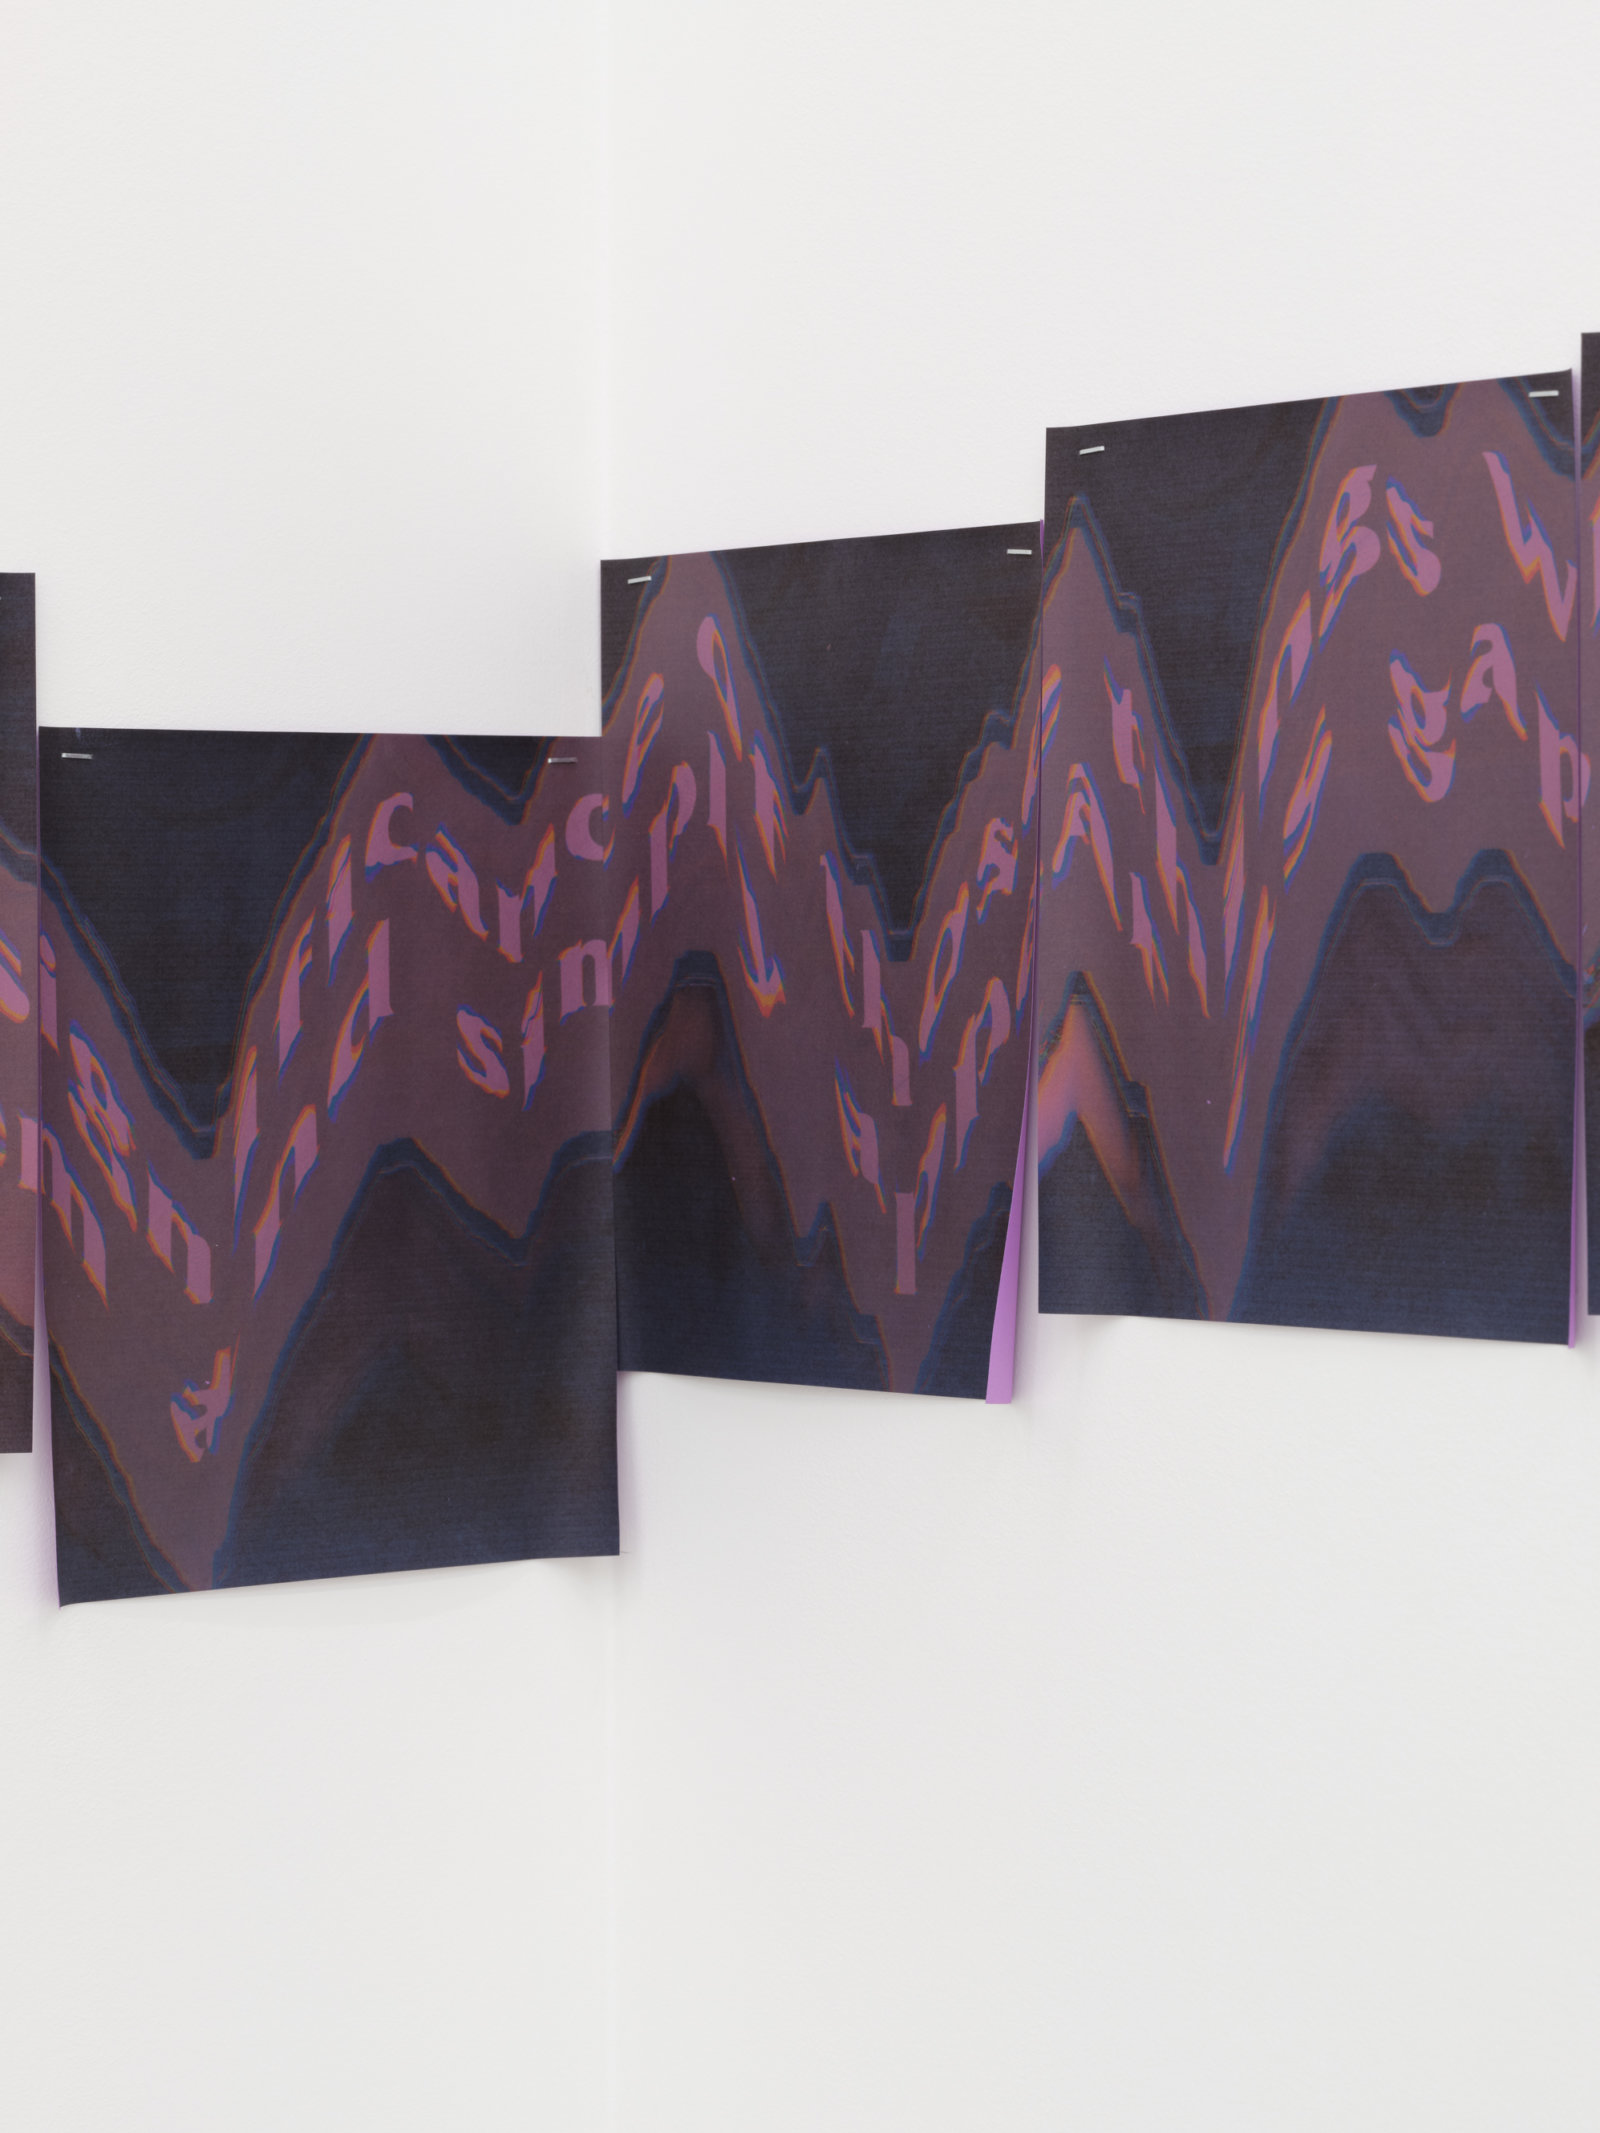 Raymond Boisjoly, having no name (detail), 2021, inkjet print on purple paper 10 parts, each 10 x 8 in. (25 x 20 cm), 21 x 76 in. (53 x 193 cm) installed